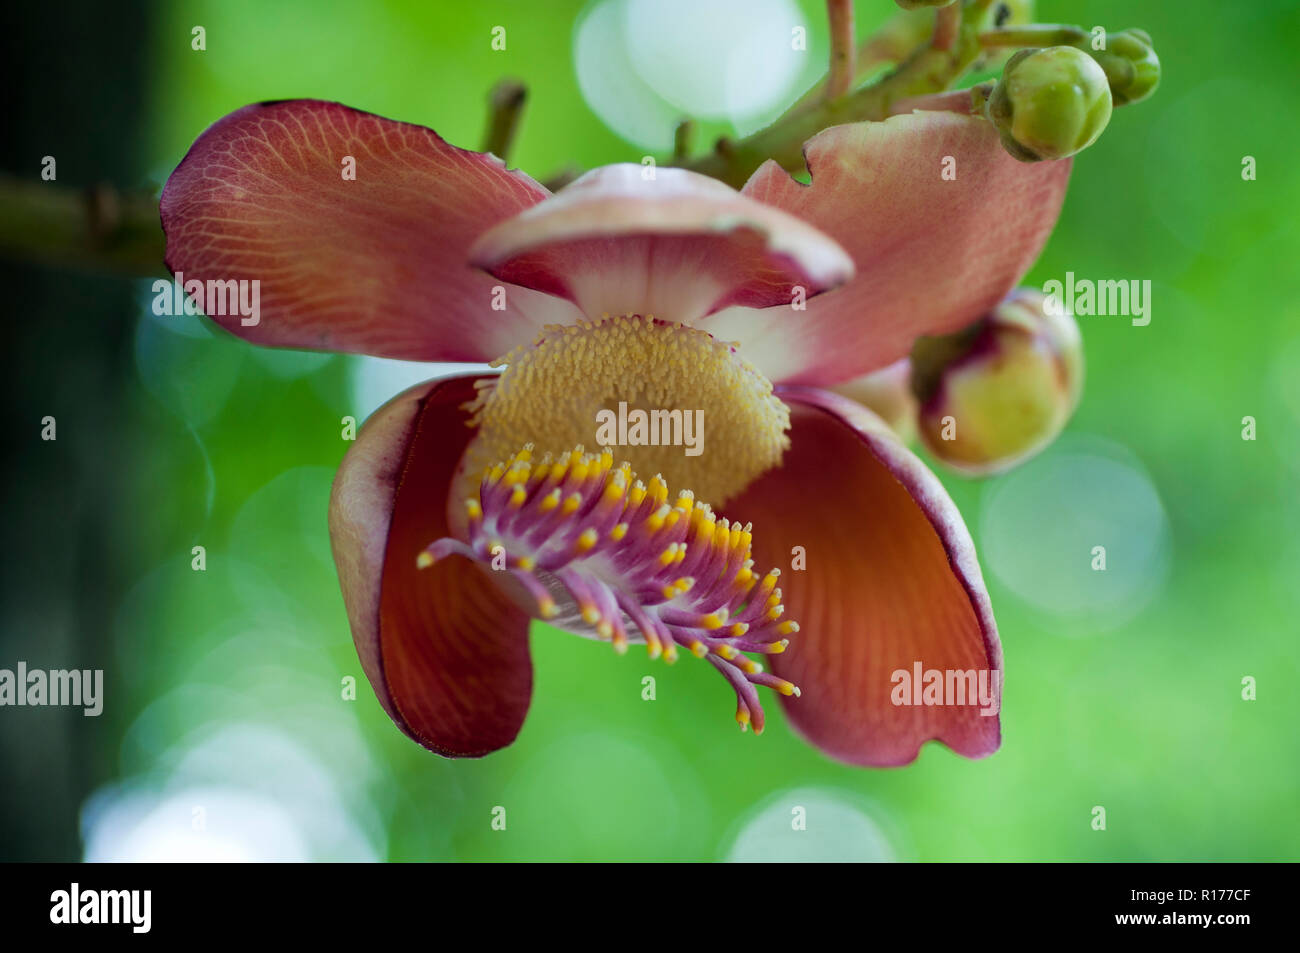 Cannonball flower also known as Nagalingam, Kaman gola, Couroupita guianensis. Bangladesh. Stock Photo